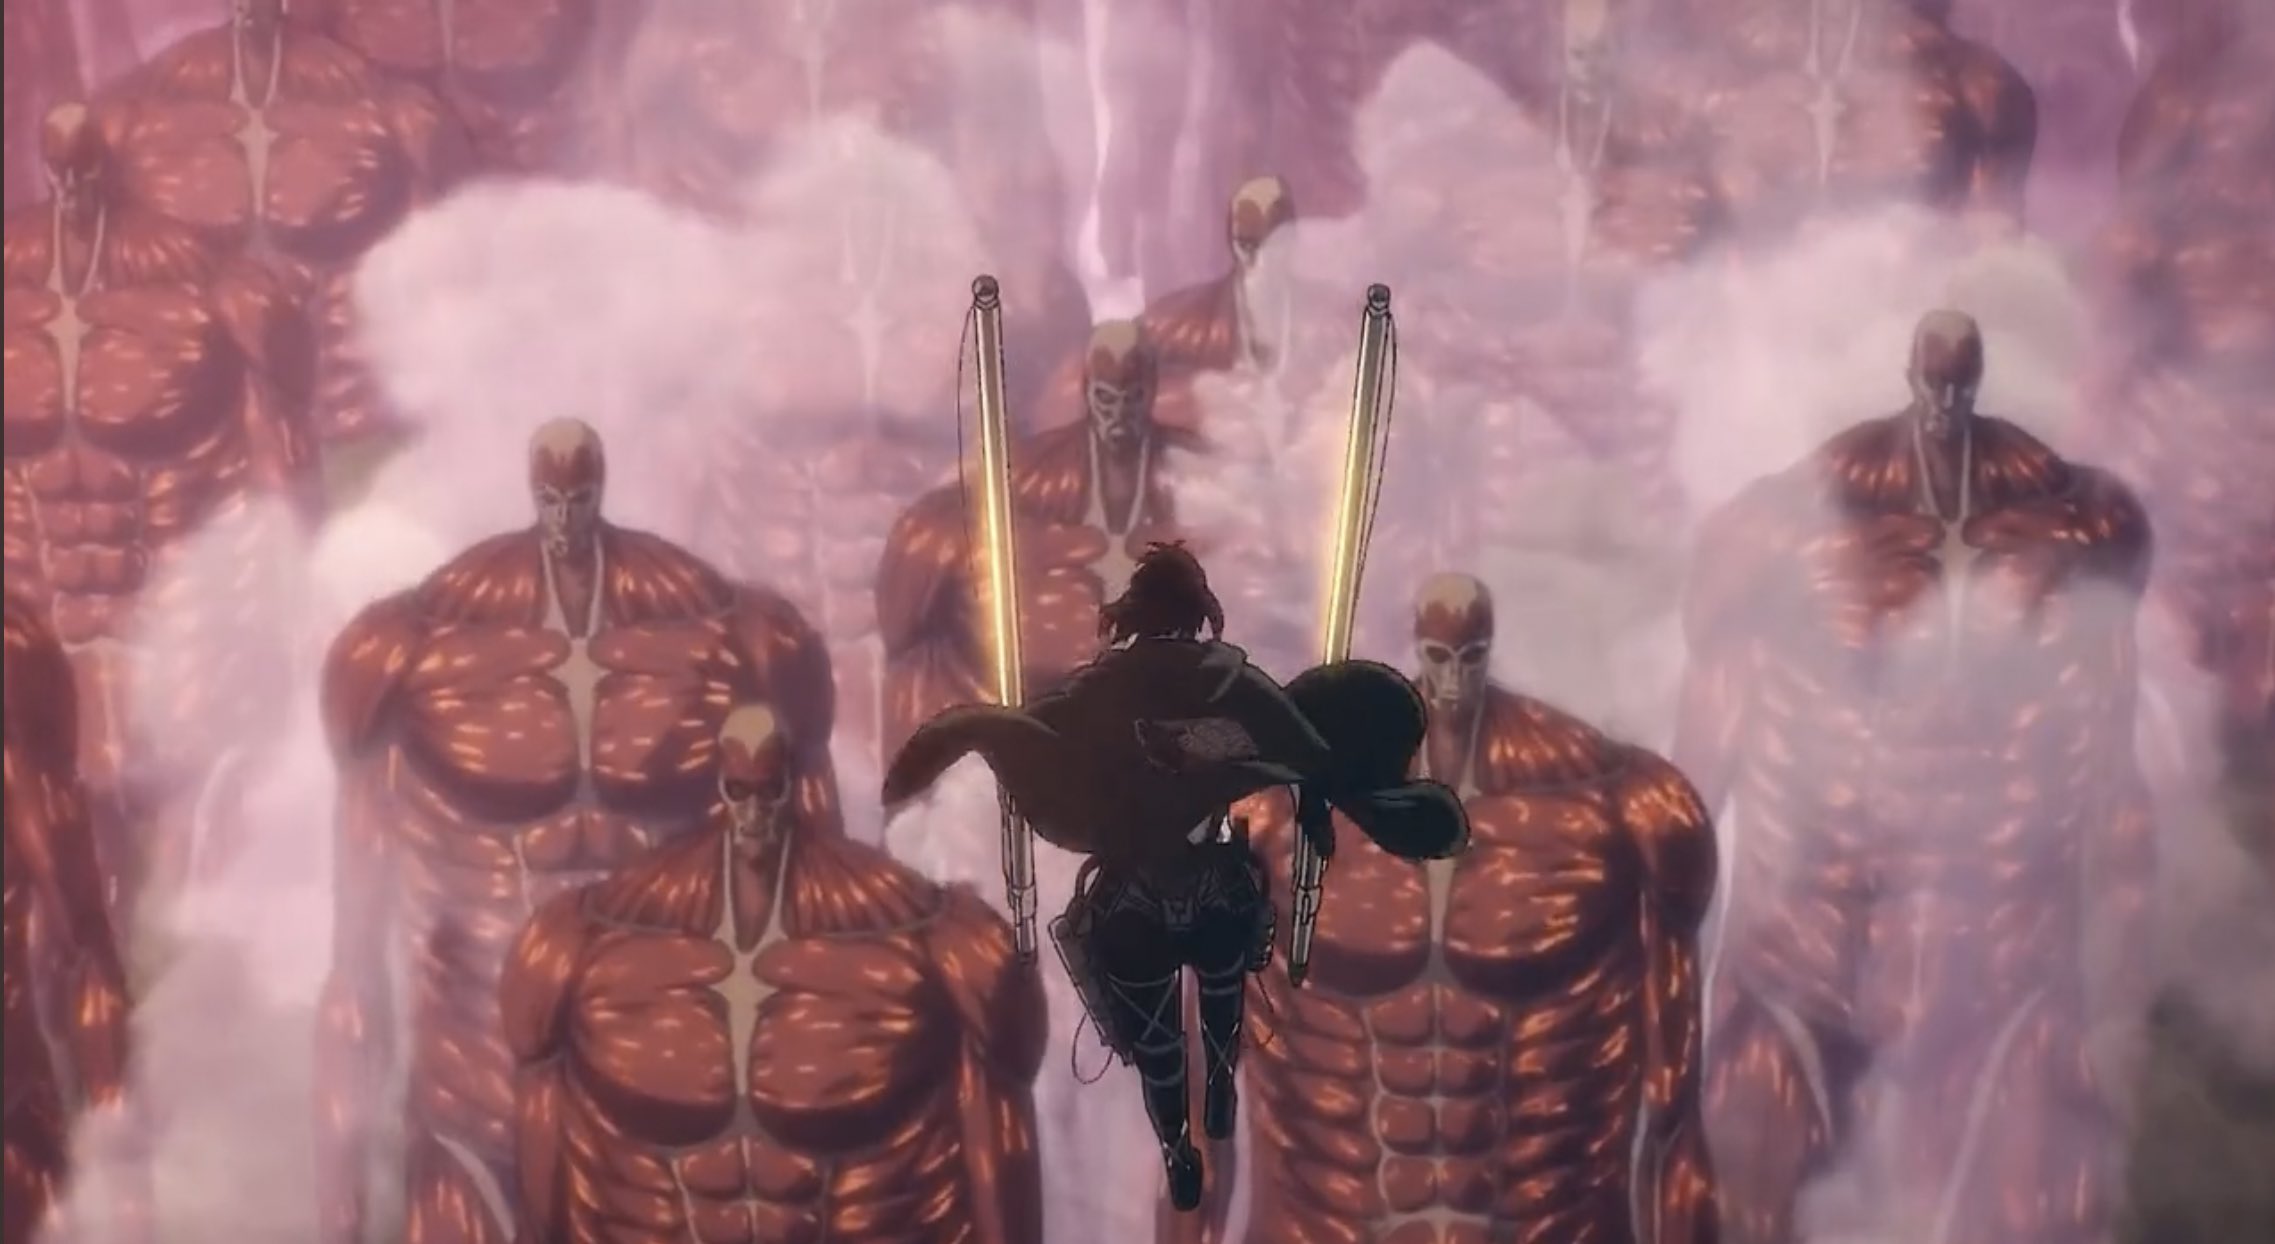 Attack on Titan' Final Season, Part 3 Review and Analysis: Eren Jaeger